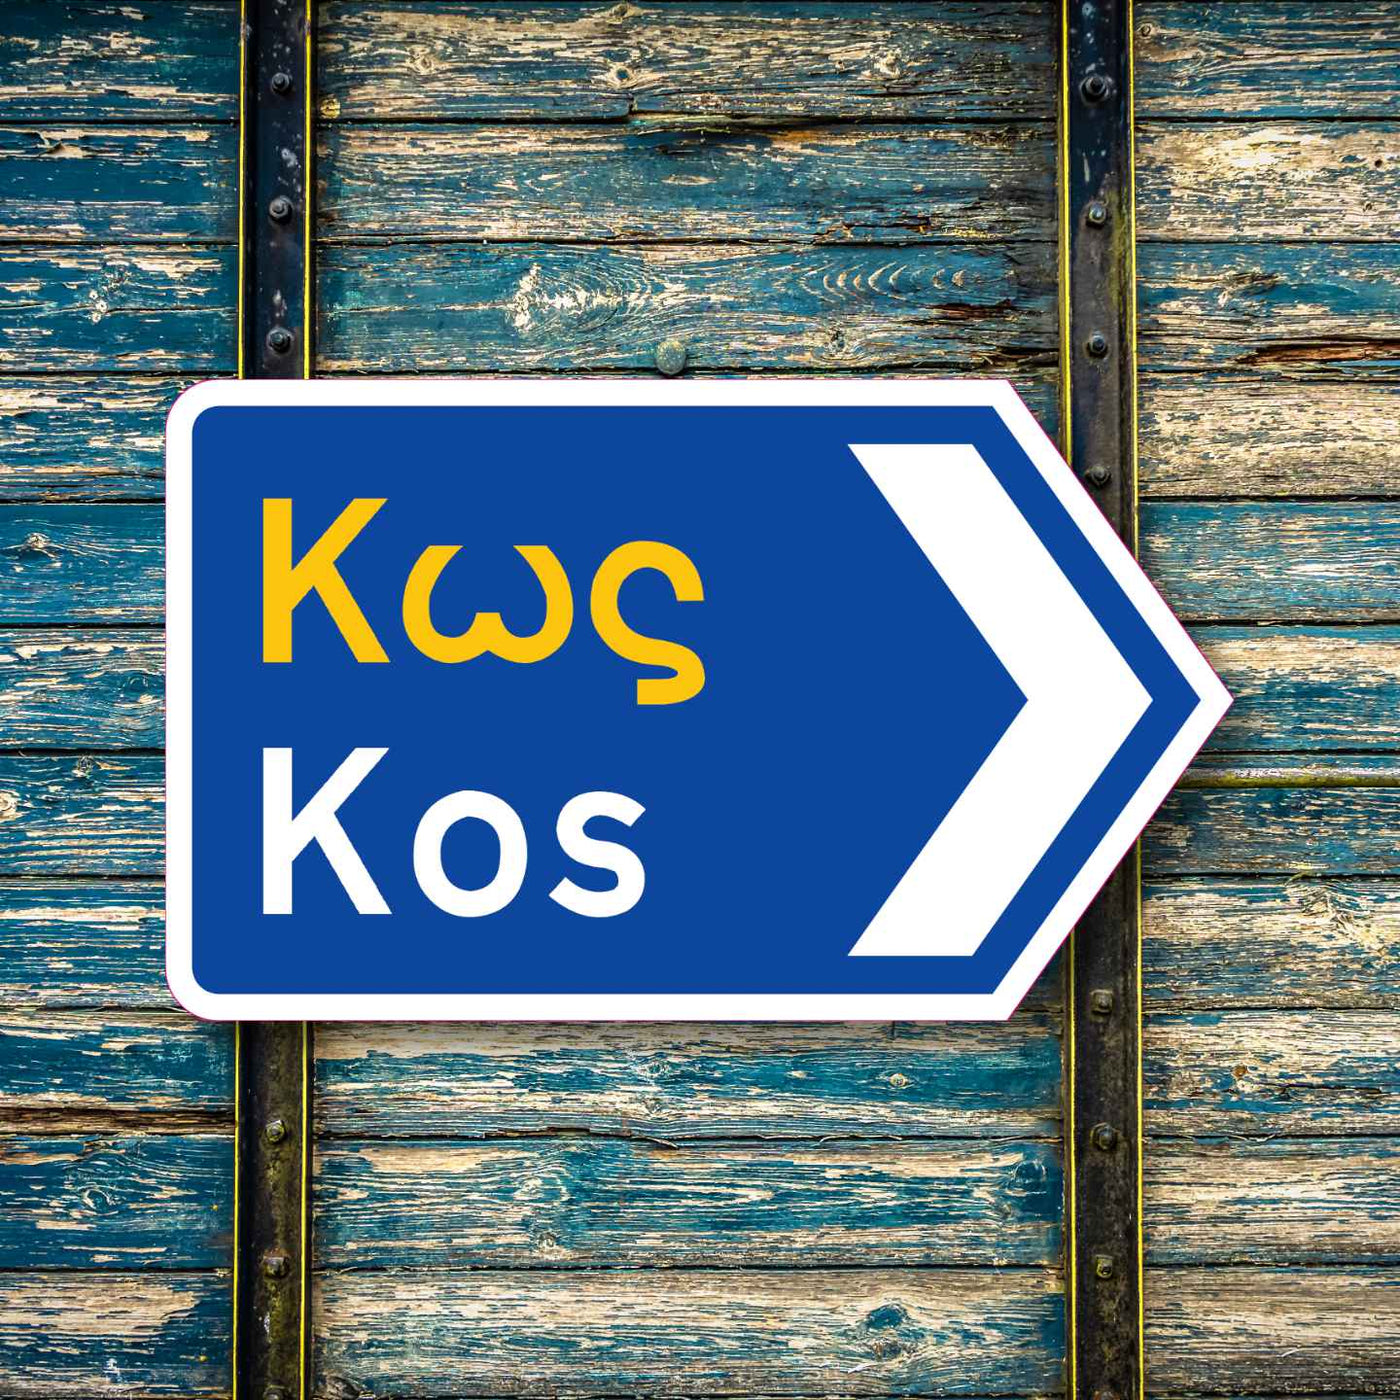 Kos Greek road sign